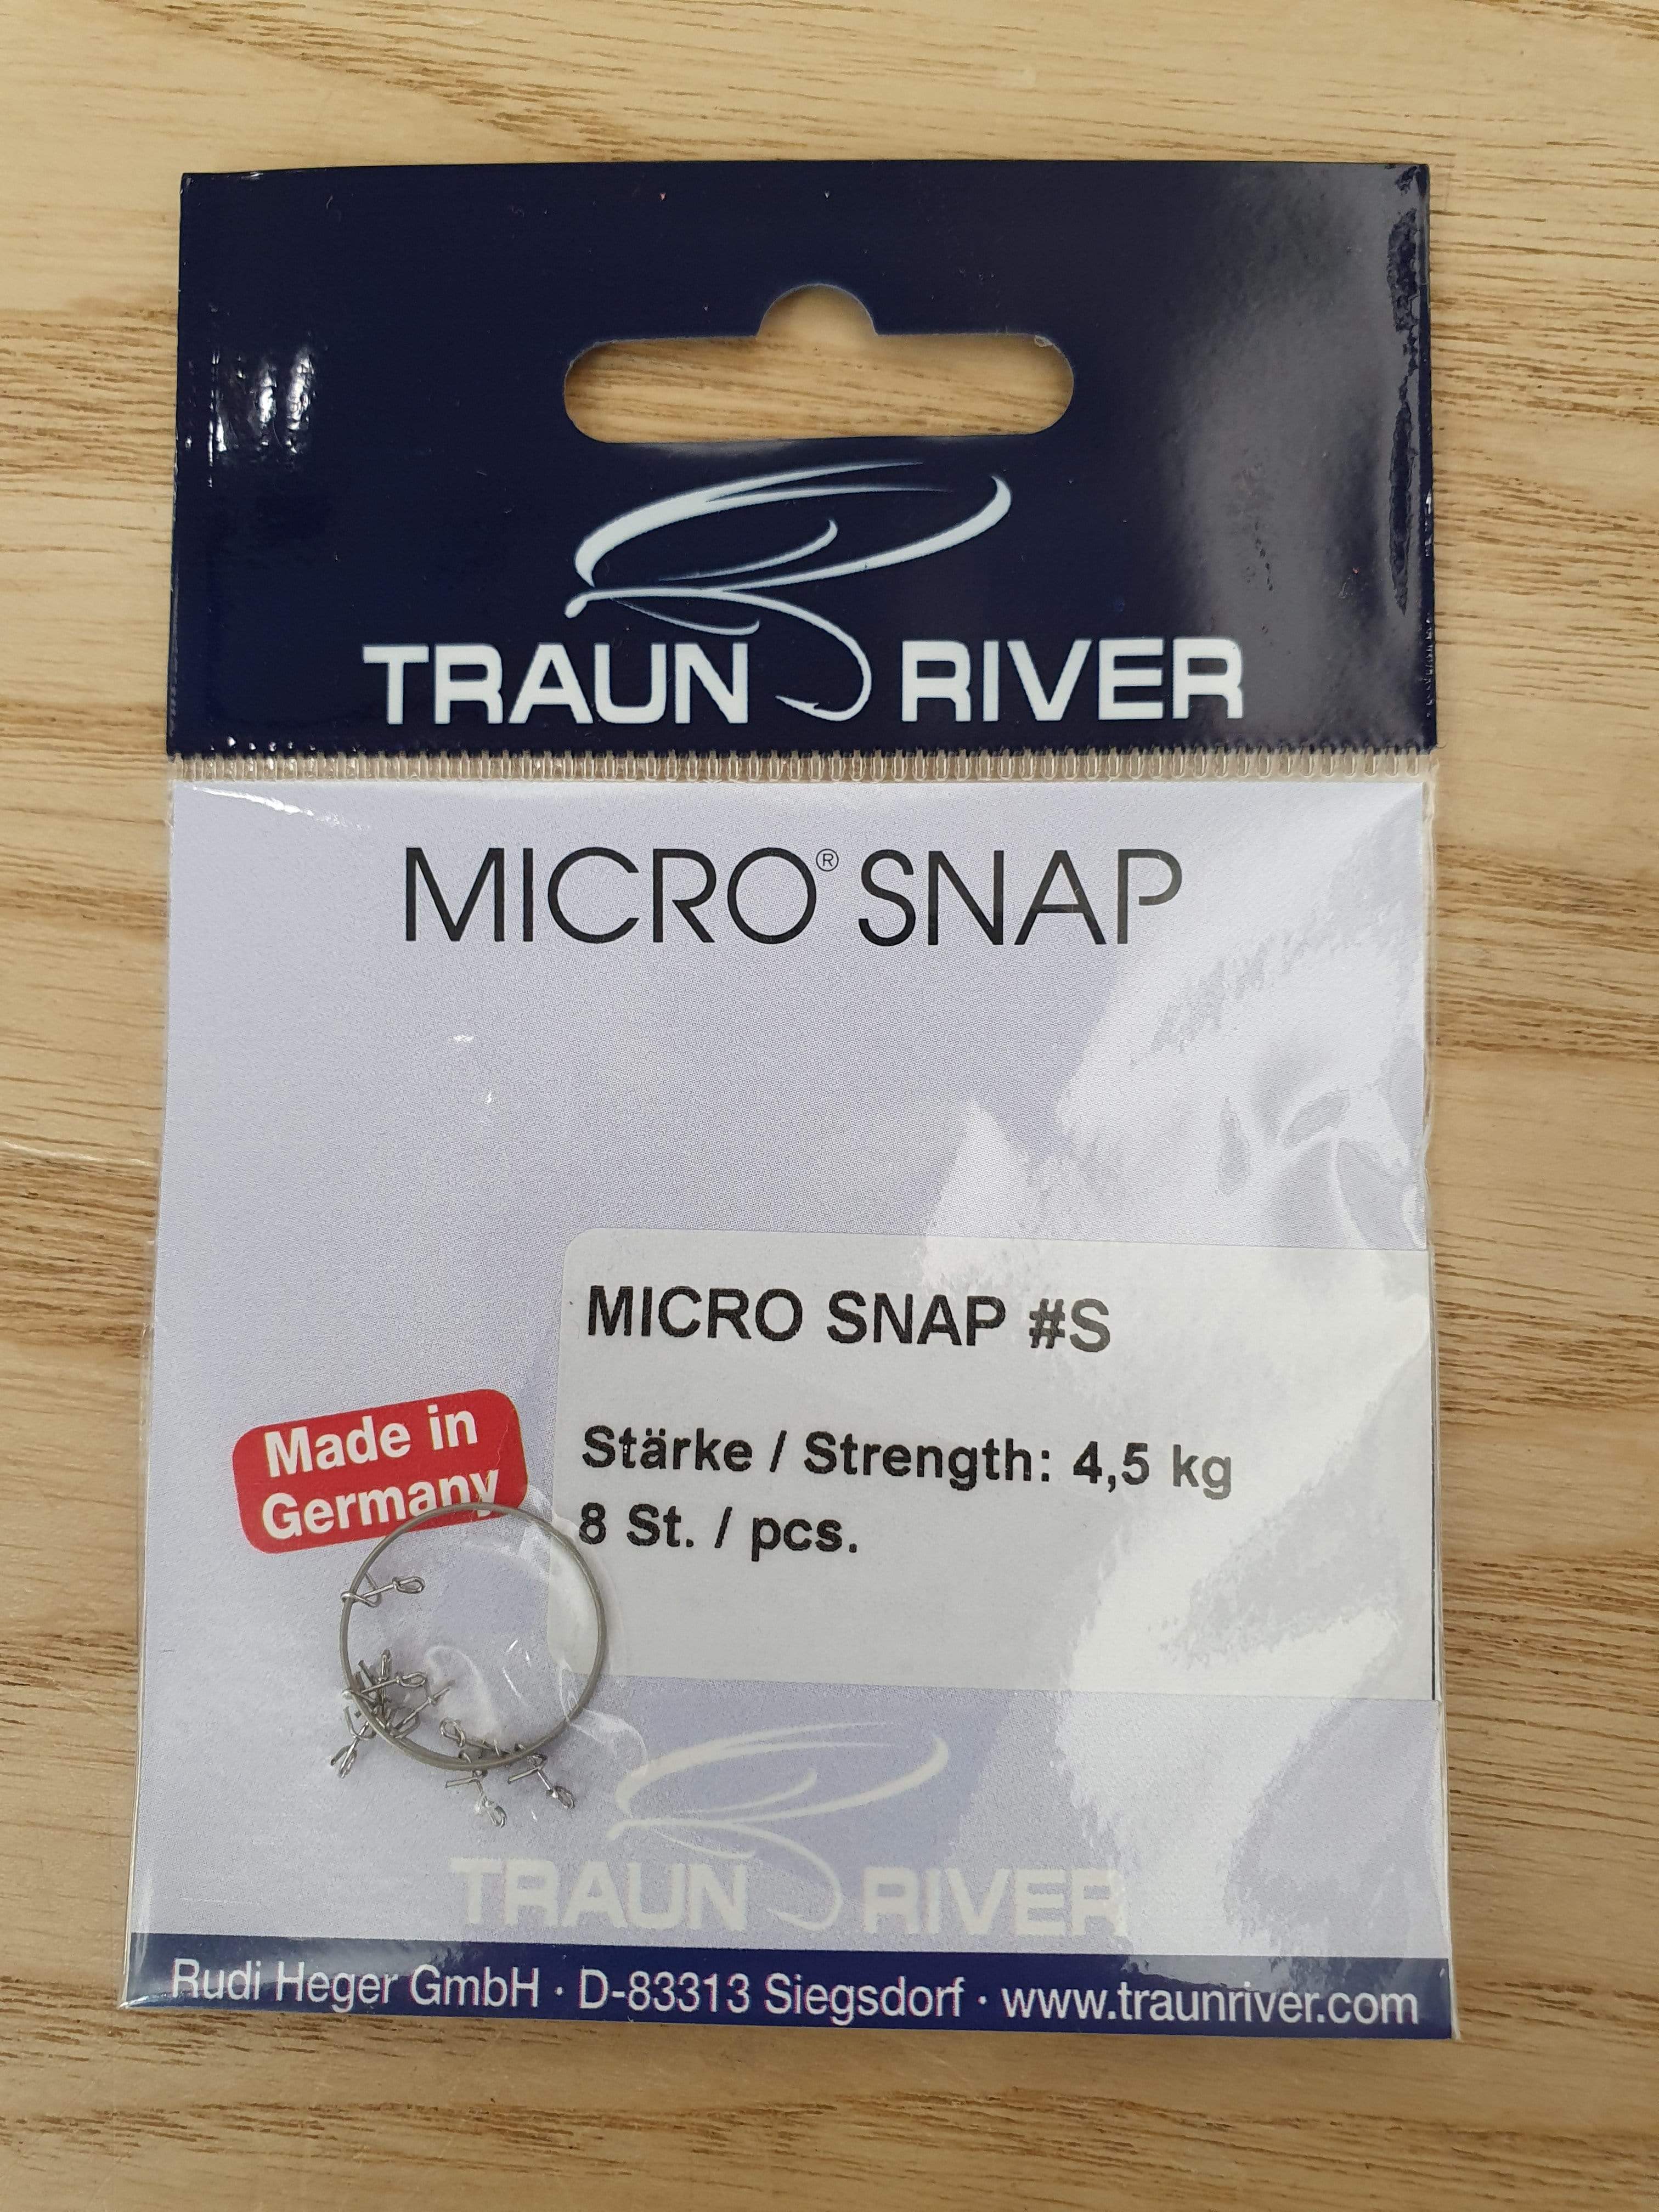 Traun River Micro Snap Micro Snap S (4.5kg) Traun River Micro Snaps